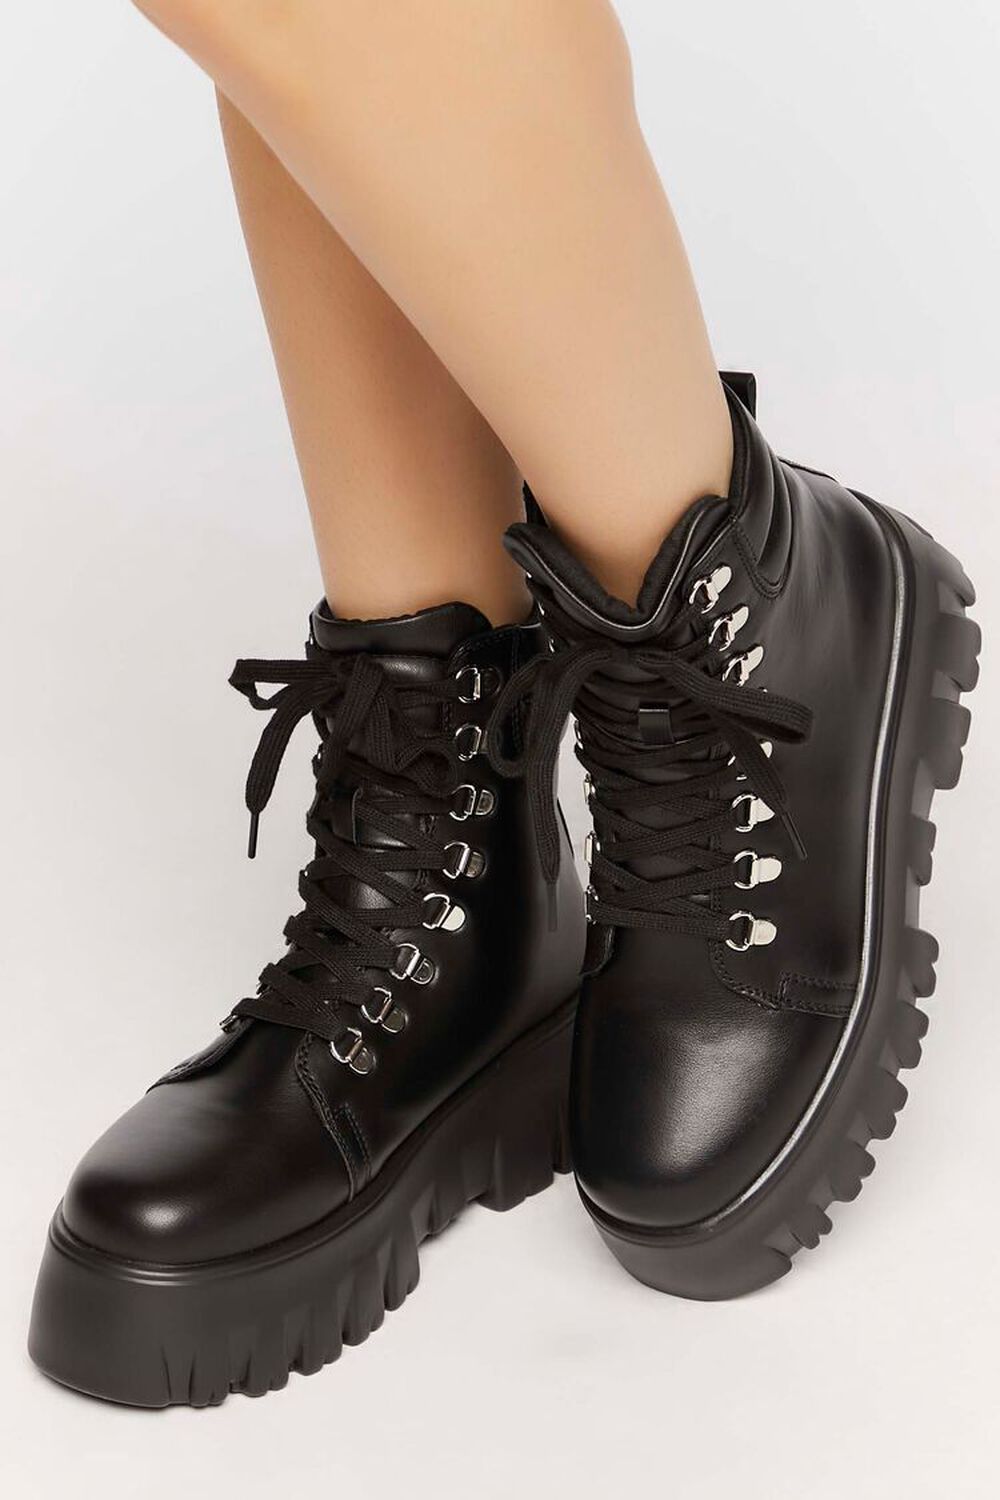 BLACK Faux Leather Lace-Up Combat Boots, image 1